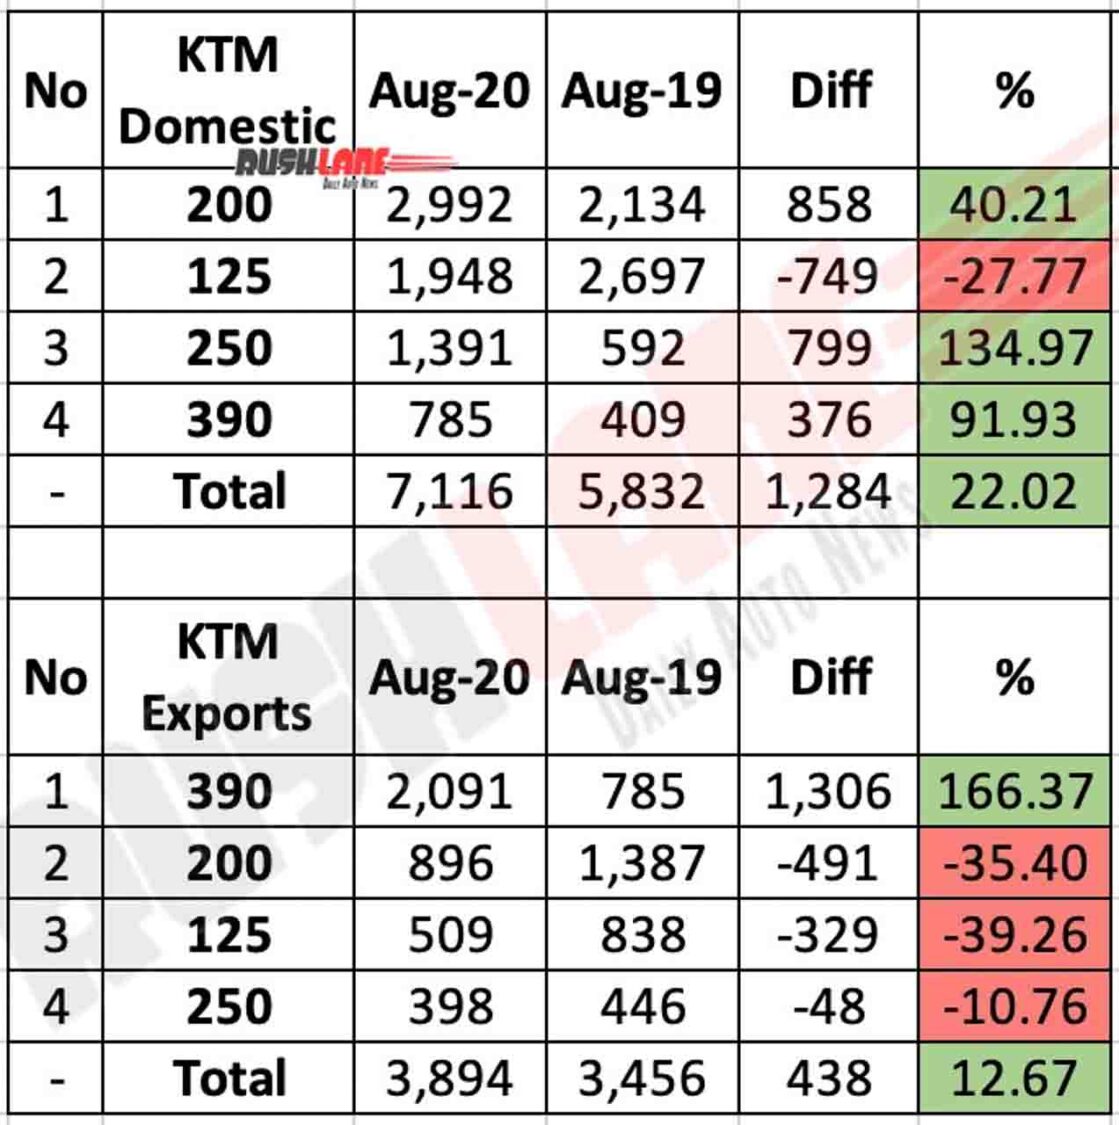 KTM India Sales Aug 2020